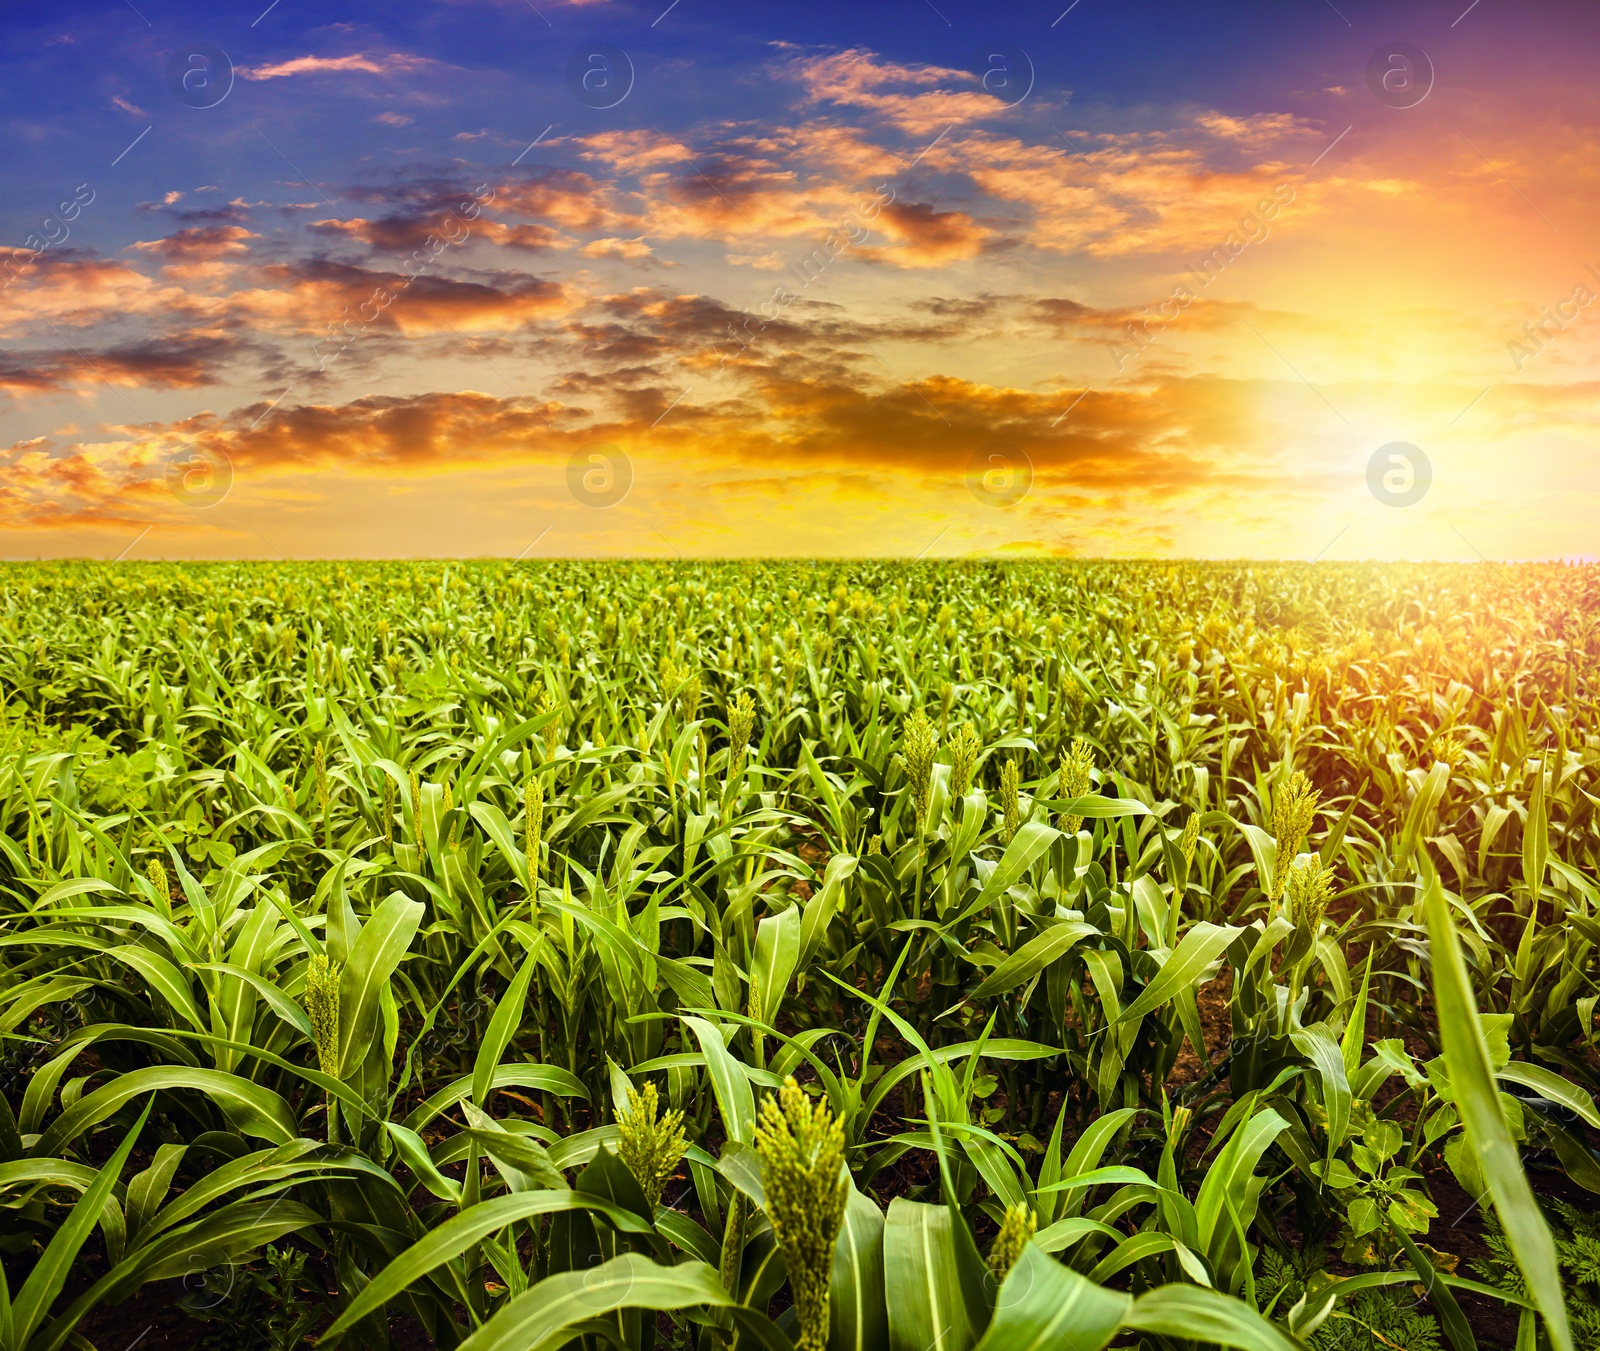 Image of Corn field under beautiful sky with sun